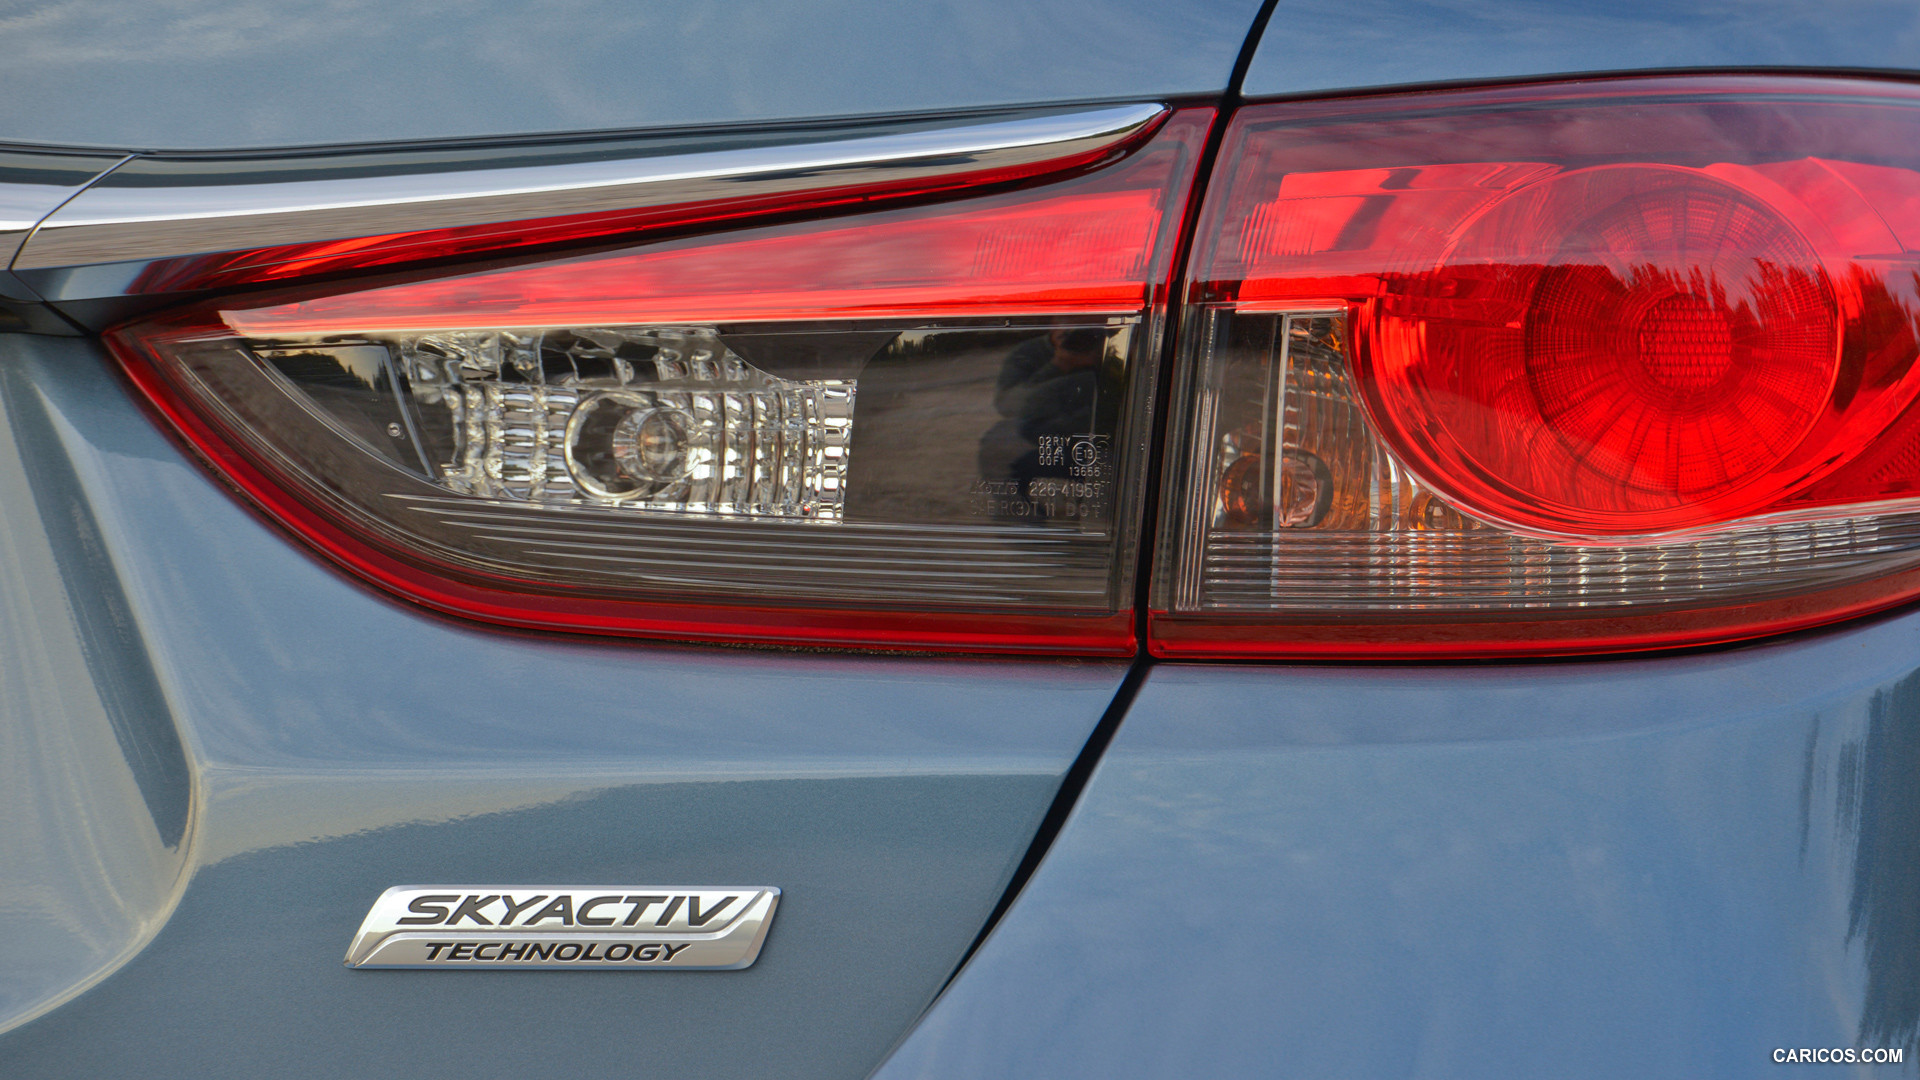 2014 Mazda6 GT - Tail Light, #152 of 179